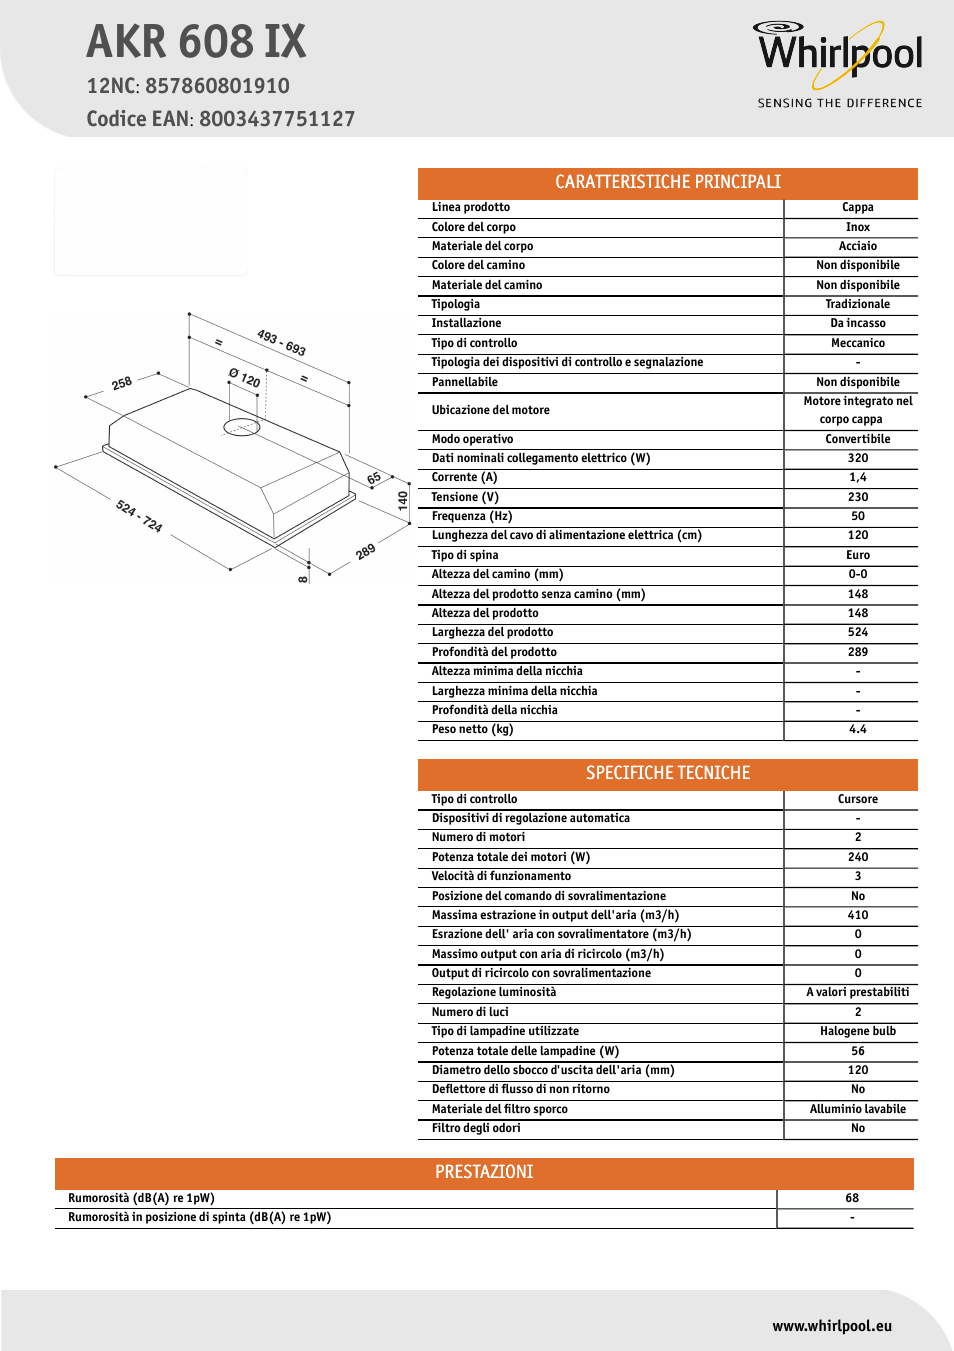 Whirlpool AKR 608 IX Manuale d'uso | Pagine: 1